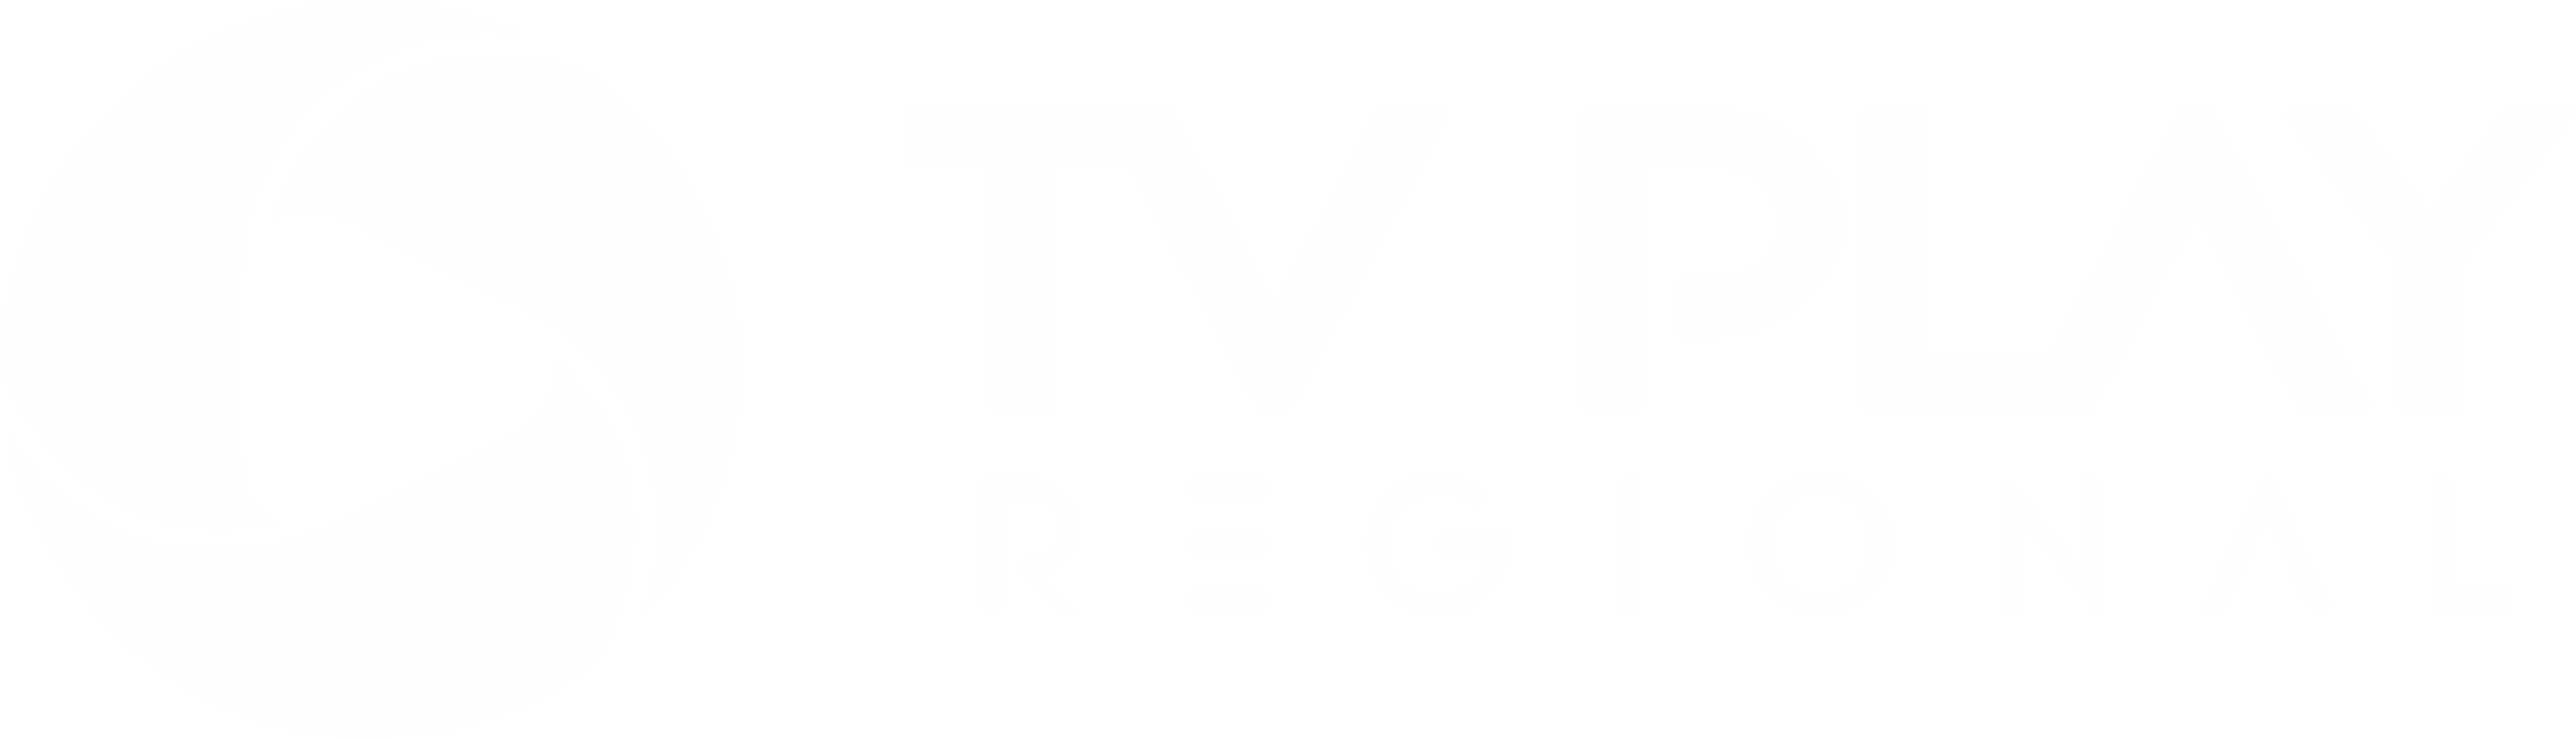 TV Play Regional